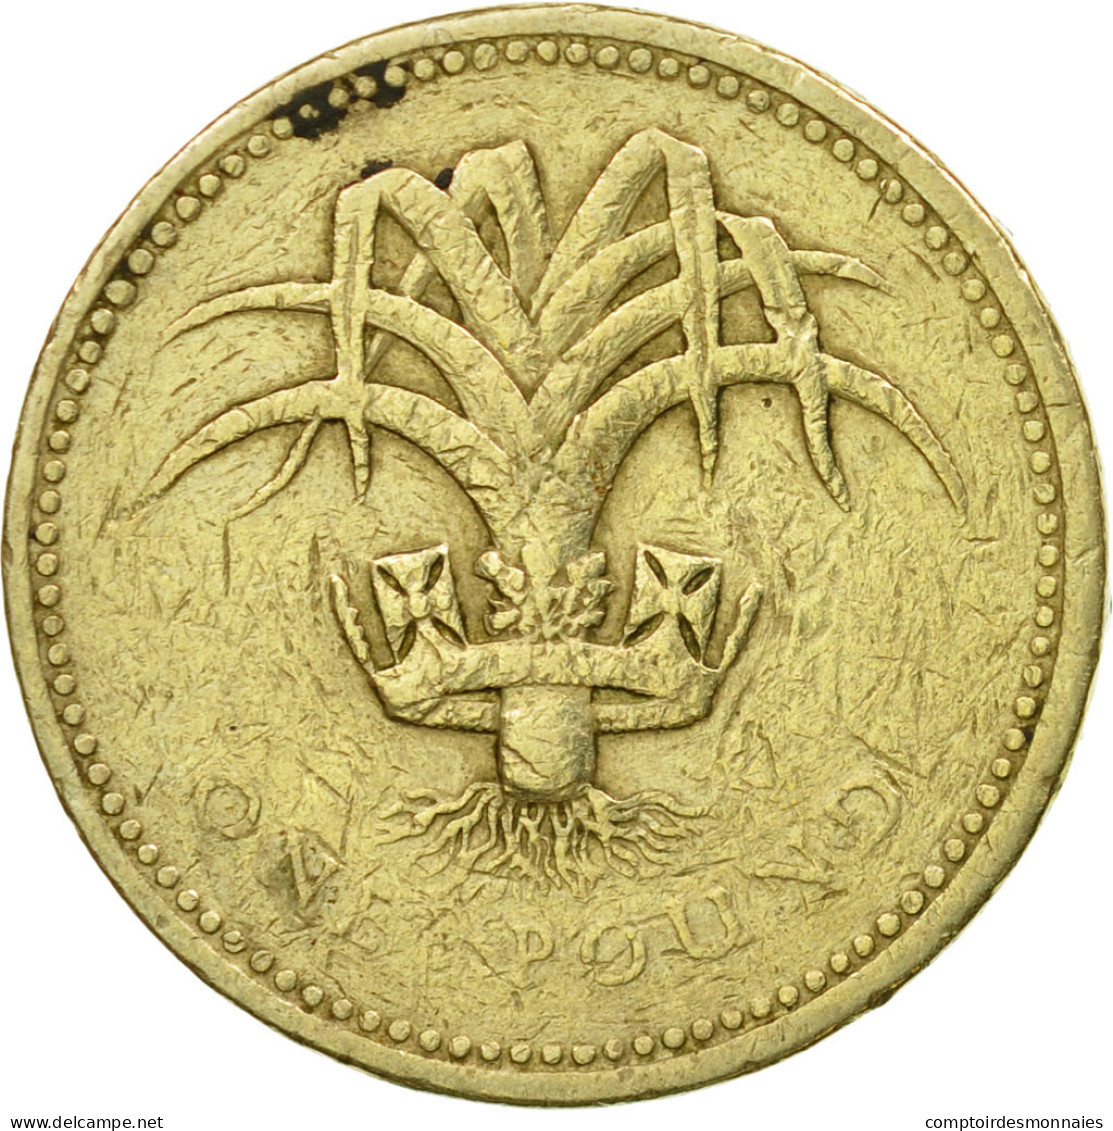 Monnaie, Grande-Bretagne, Elizabeth II, Pound, 1985, TB, Nickel-brass, KM:941 - 1 Pound